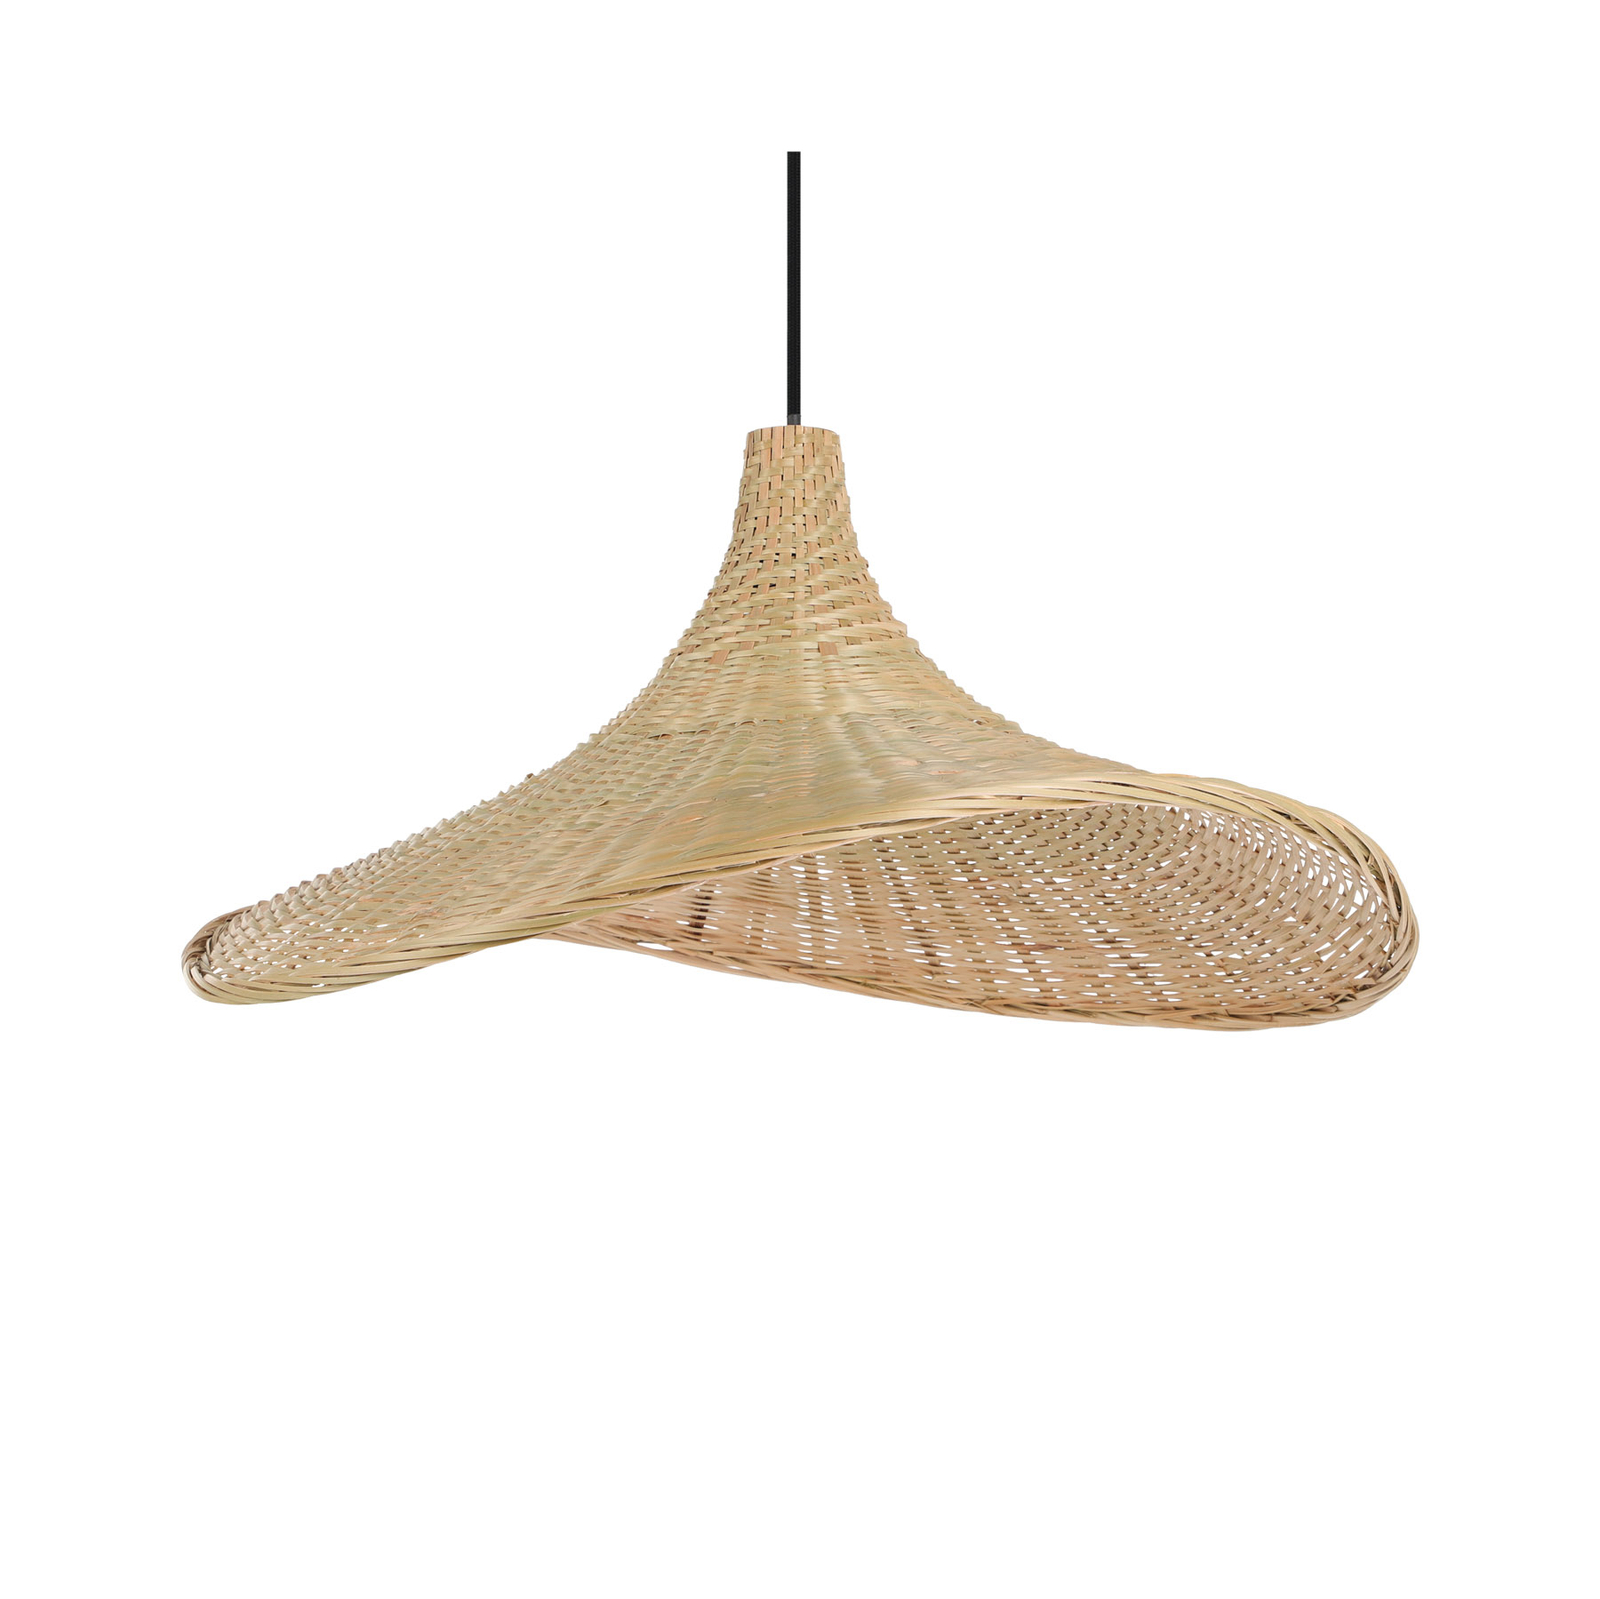 Hanglamp Haxey met bamboe kap, Ø 50 cm